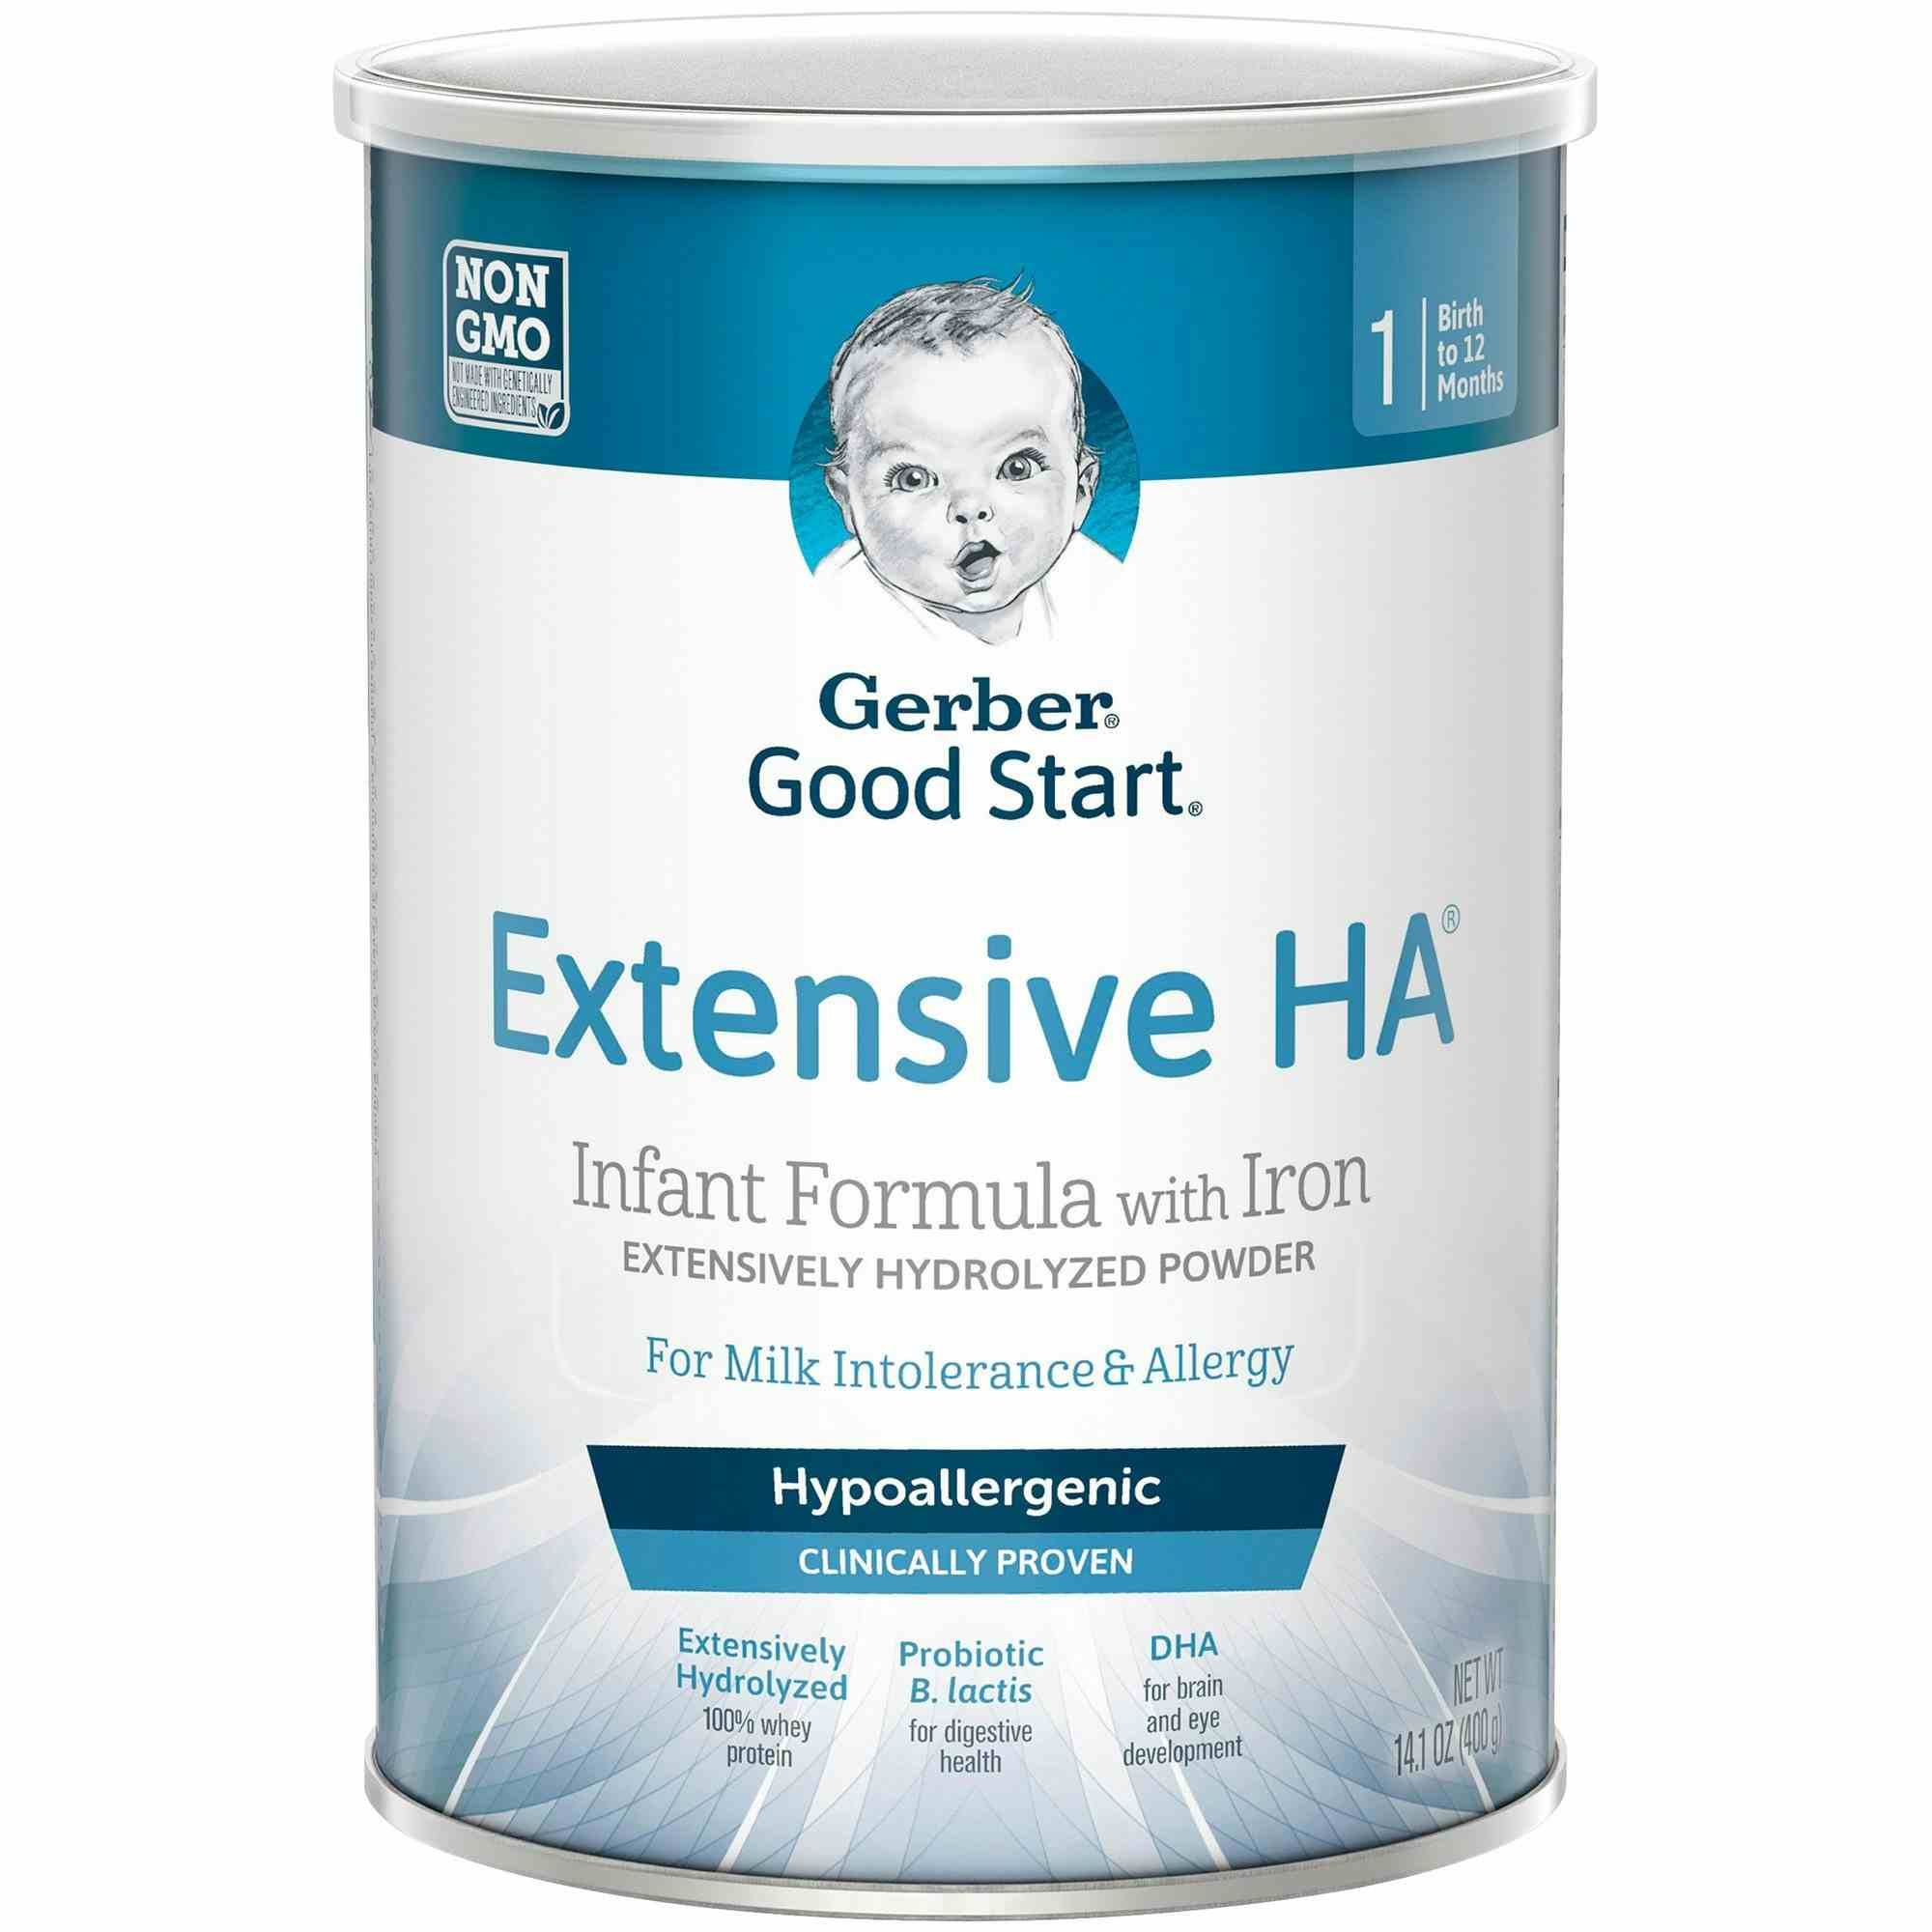 Gerber Good Start Extensive HA Infant Formula with Iron, 14.1 oz., 5000048519, 1 Can